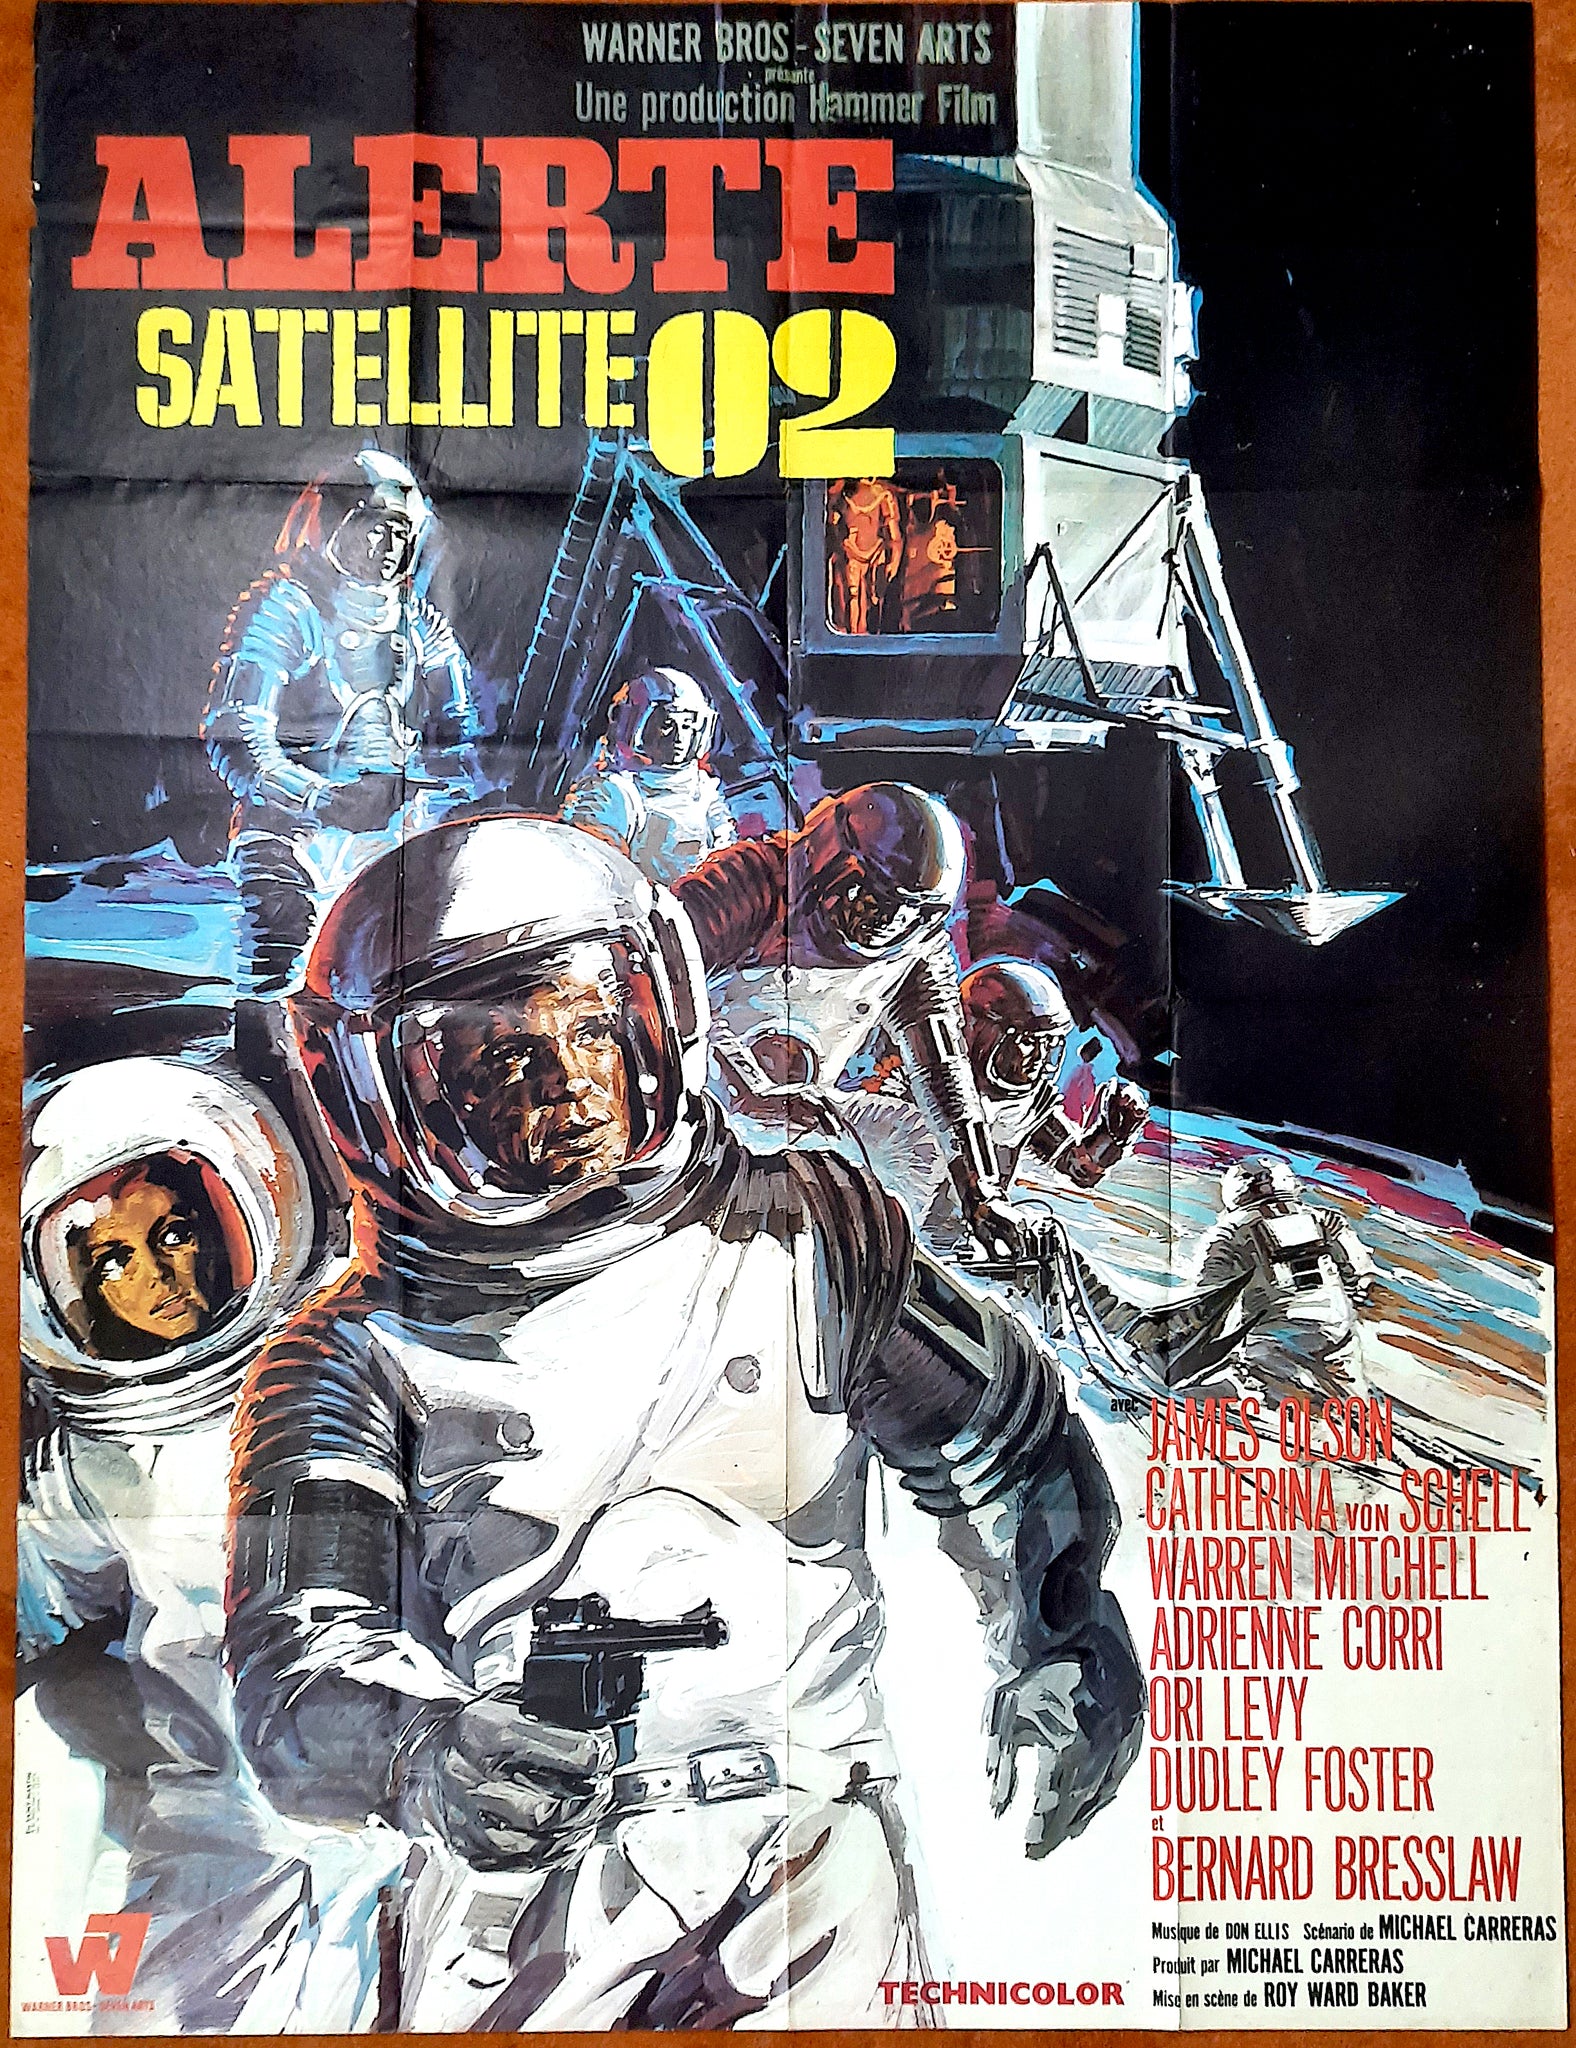 Moon Zero Two (1969) French Grande Poster